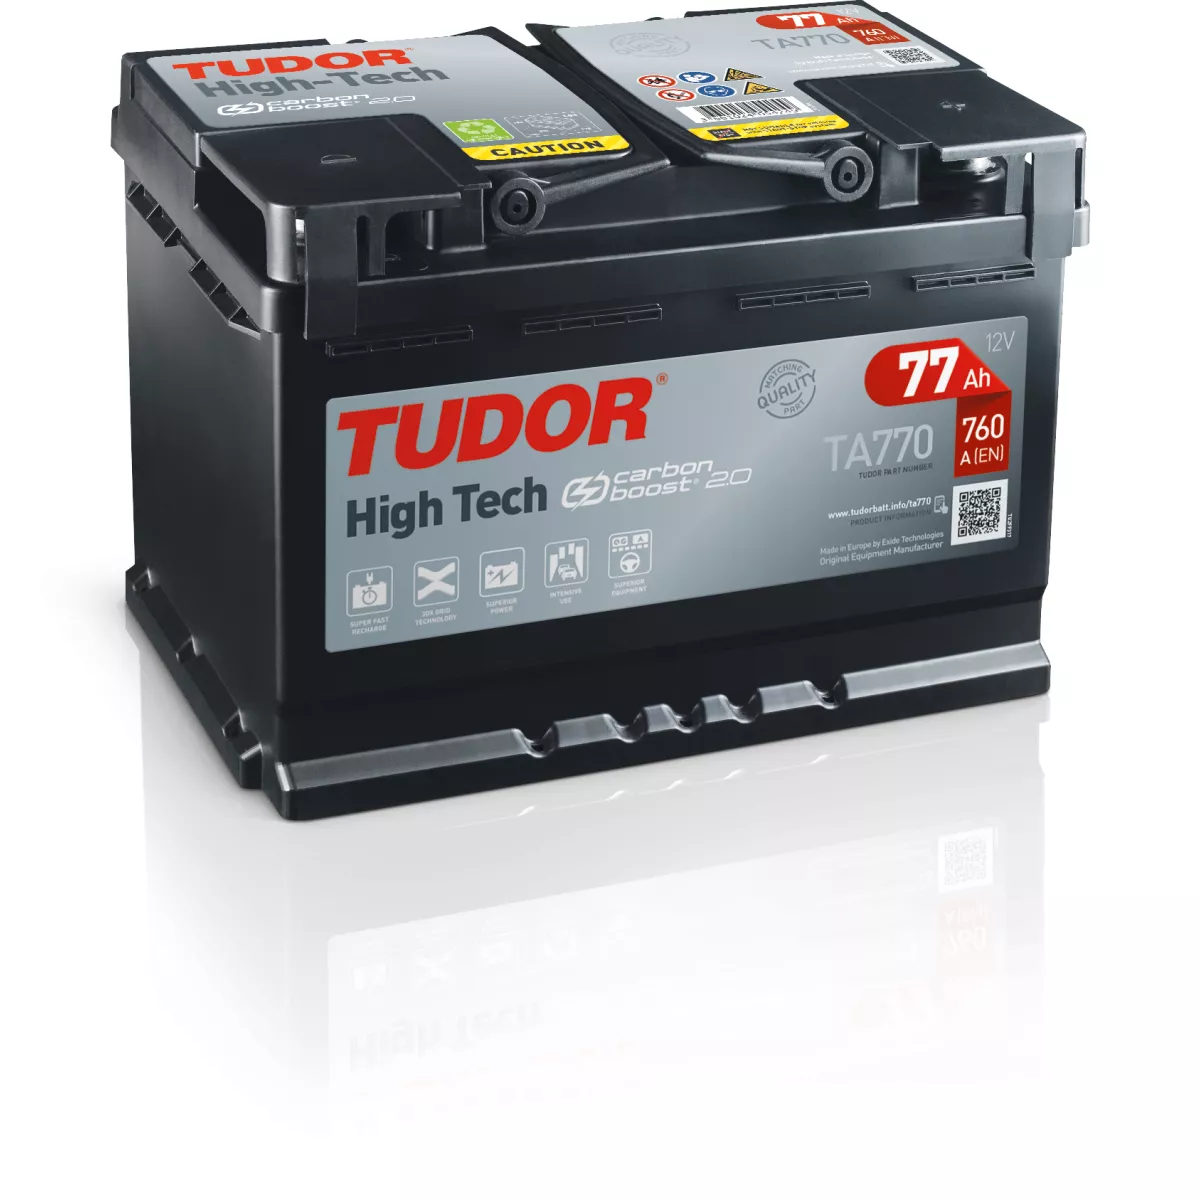 Batterie HIGH TECH TUDOR TA770 12V 77Ah 760A - Batteries Auto, Voitures,  4x4, Véhicules Start & Stop Auto - BatterySet